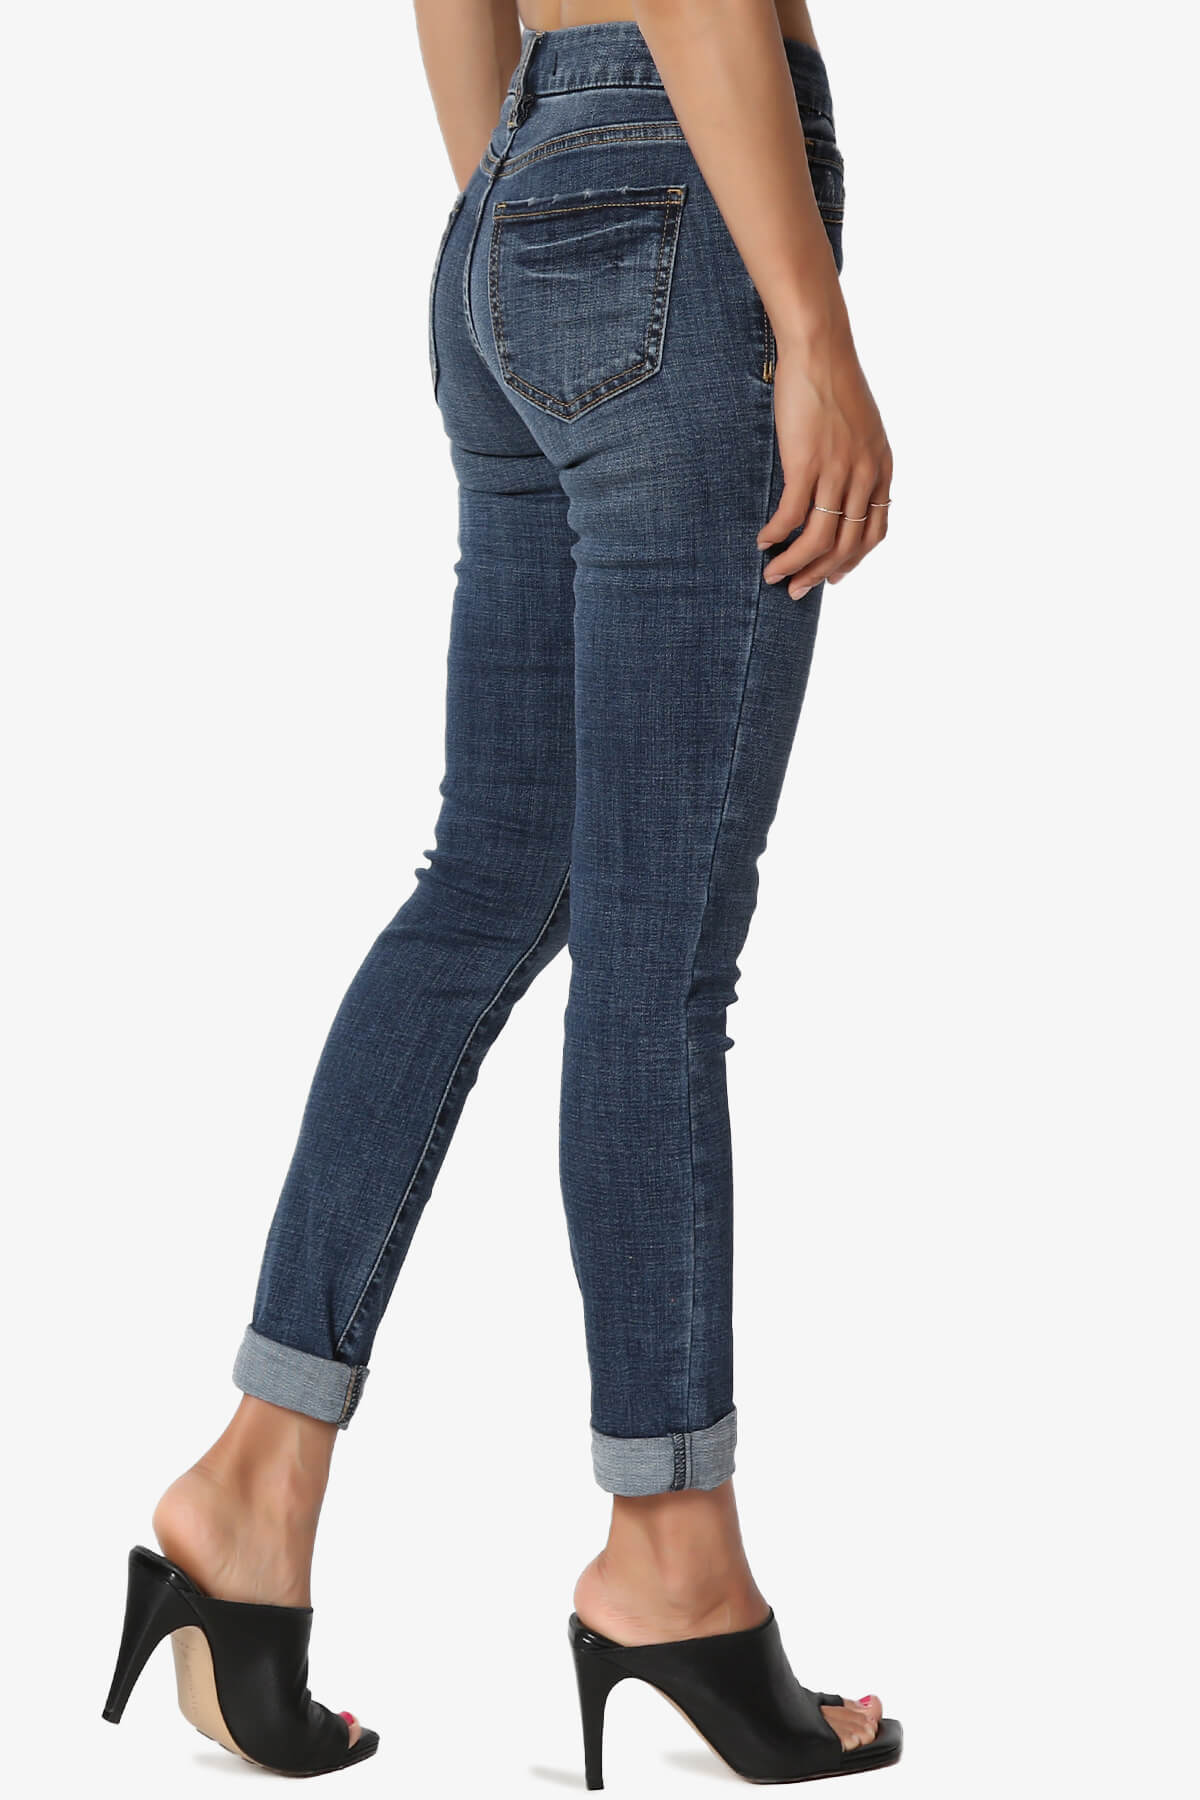 TheMogan Women's 0~3X Roll Up Mid Rise Dark Vintage Wash Tencel Denim Skinny Jeans - image 4 of 7